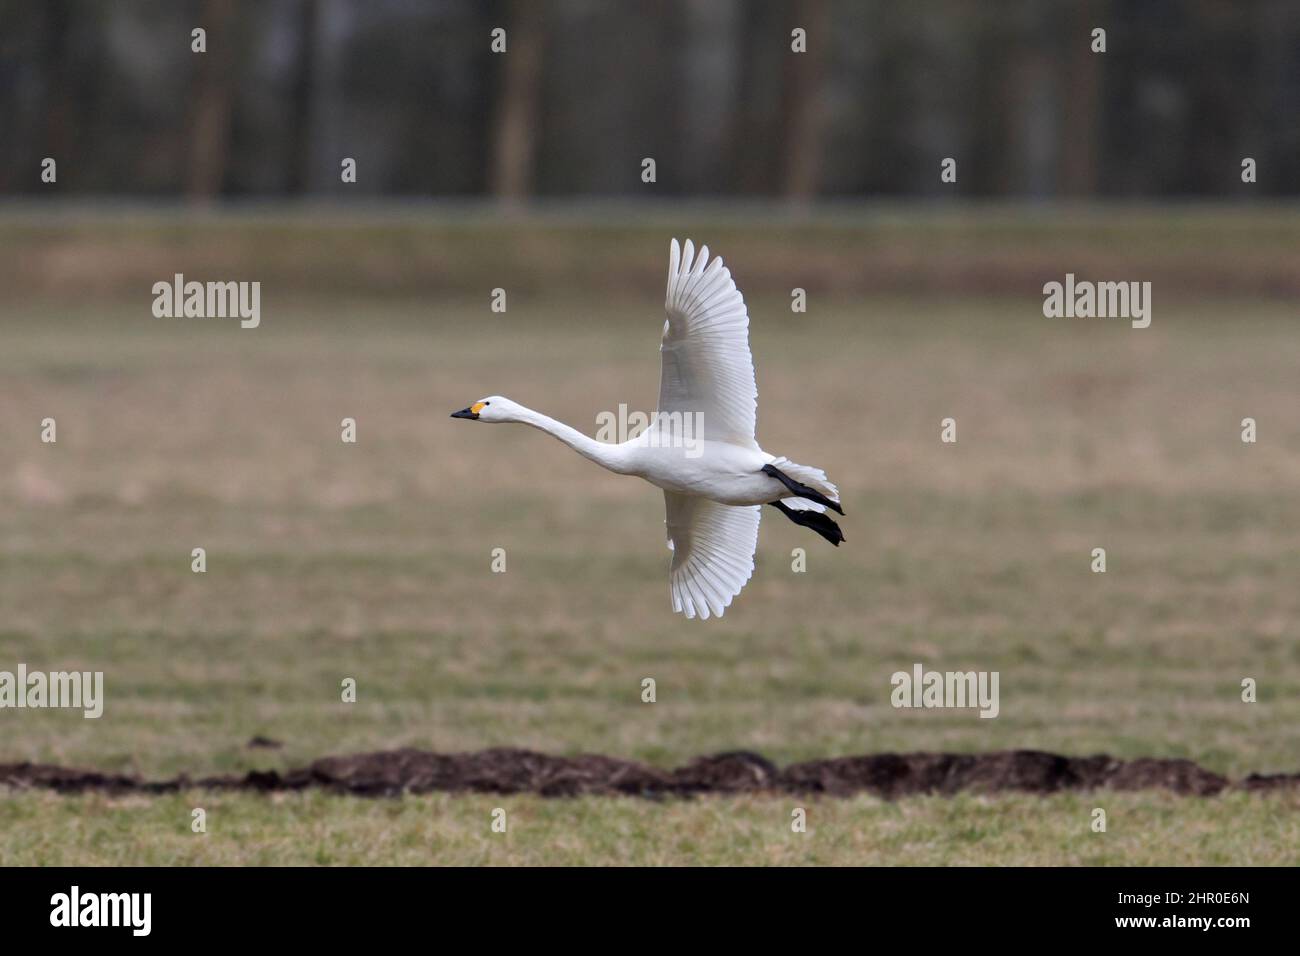 Flying tundra swan / Bewick's swan (Cygnus bewickii / Cygnus columbianus bewickii) landing with spread wings in field / grassland in spring Stock Photo